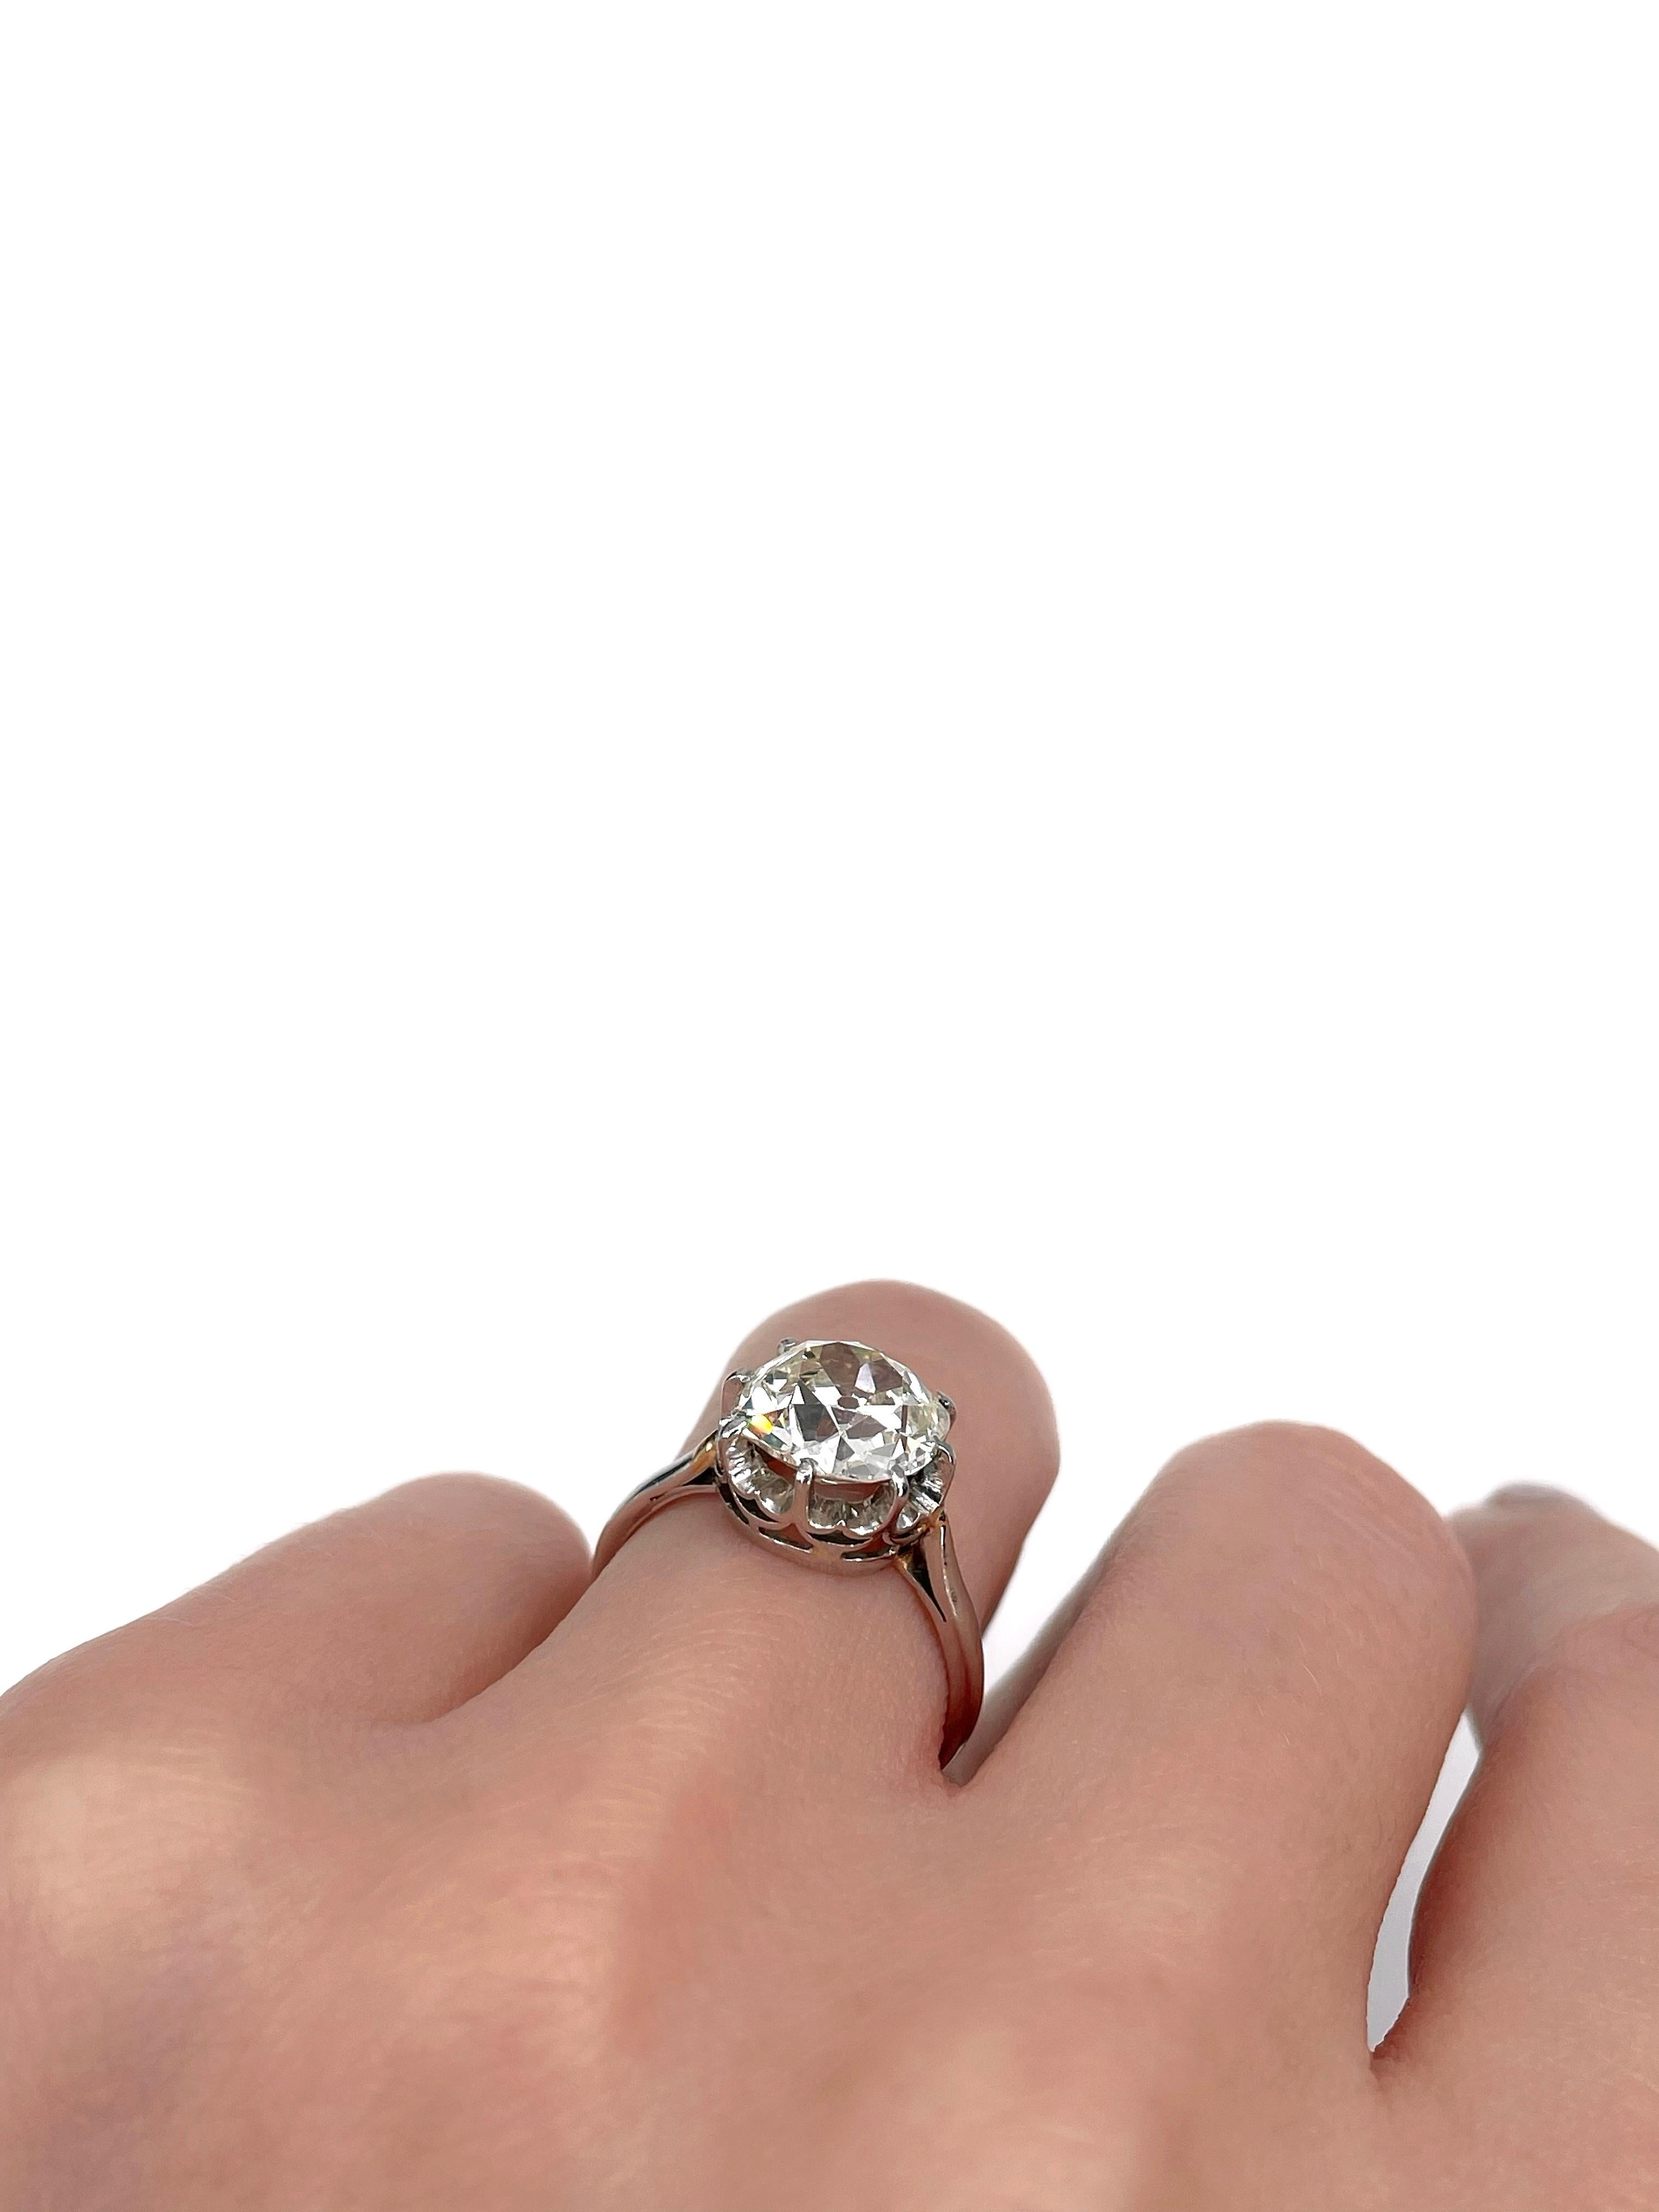 3.2 carat diamond ring